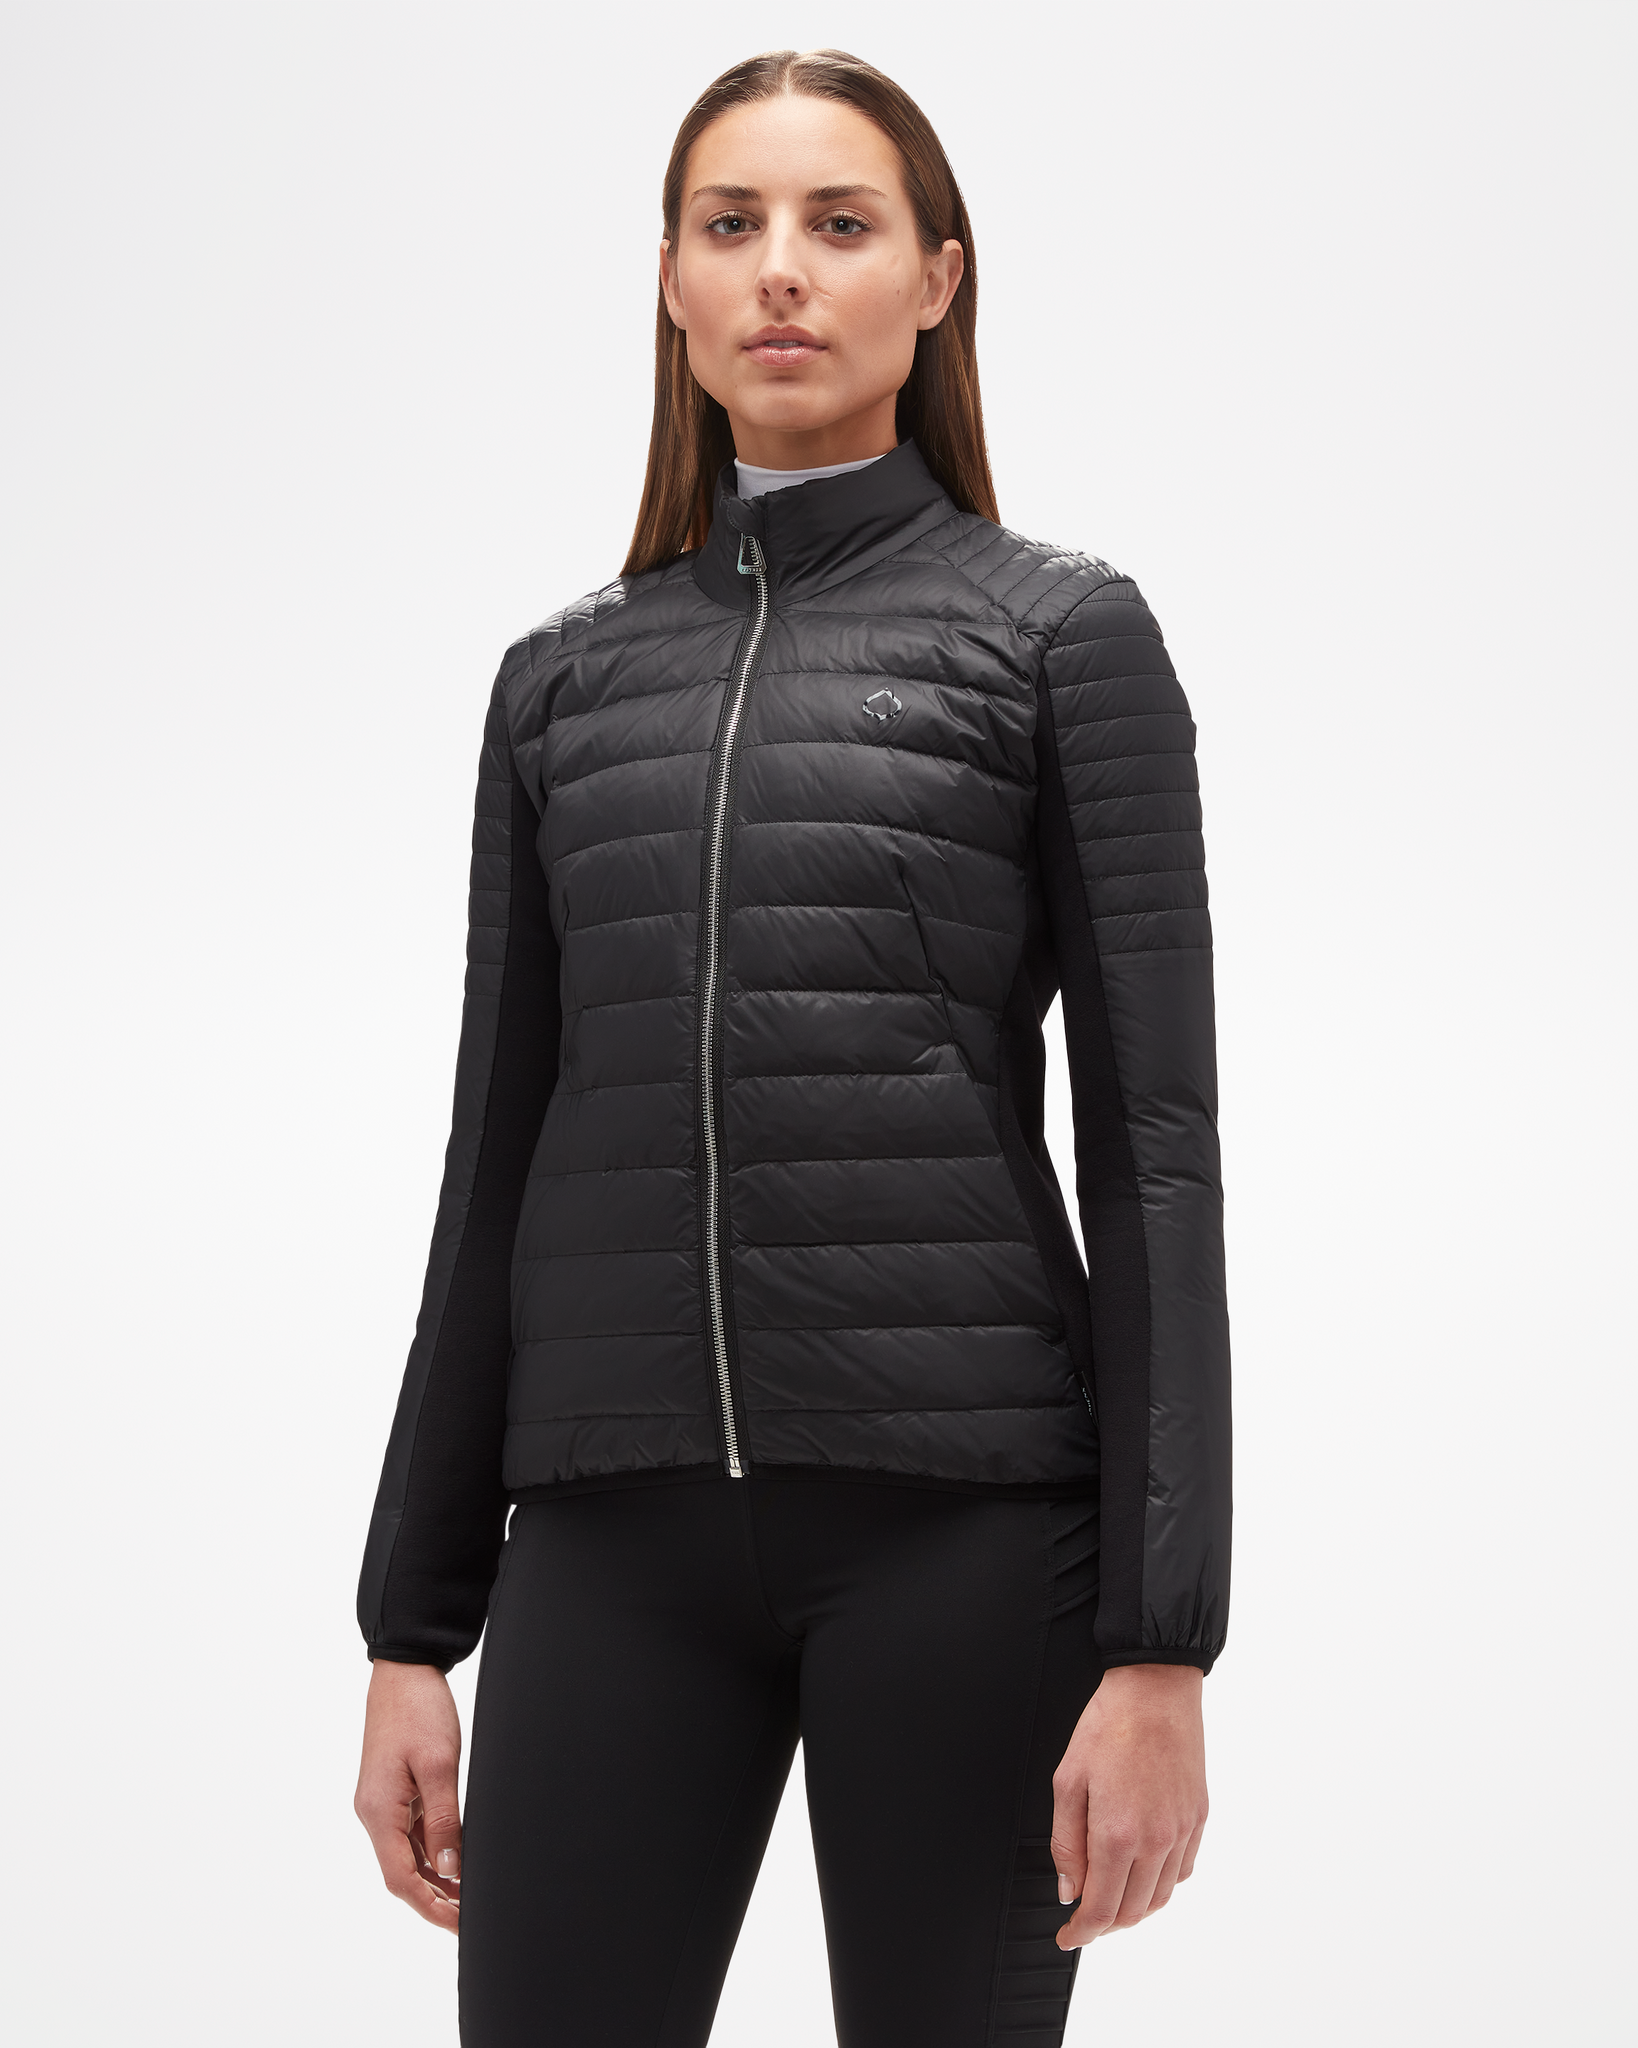 ASPENX Aether Ozone Women's Jacket Black